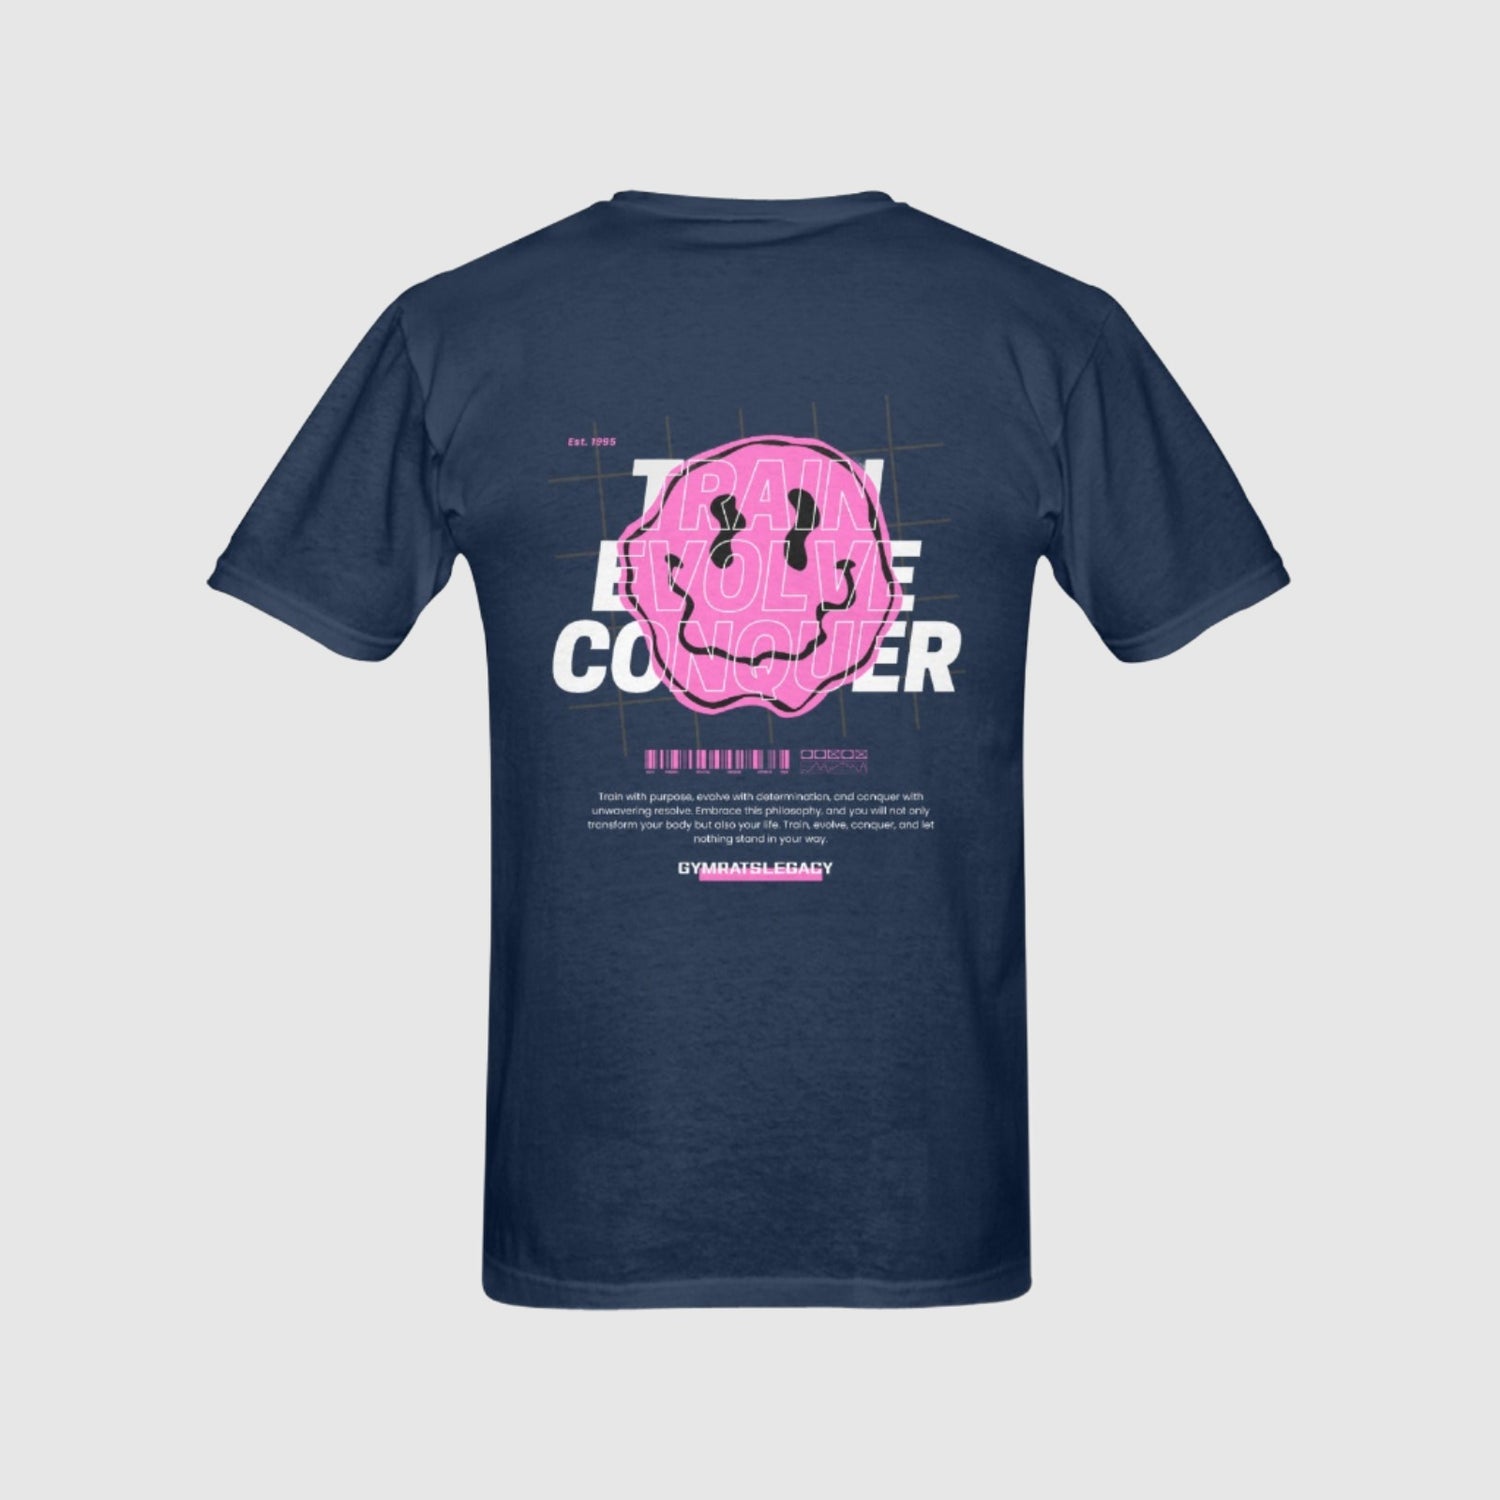 T-Shirt Train Evolve Conquer - Gymratslegacy